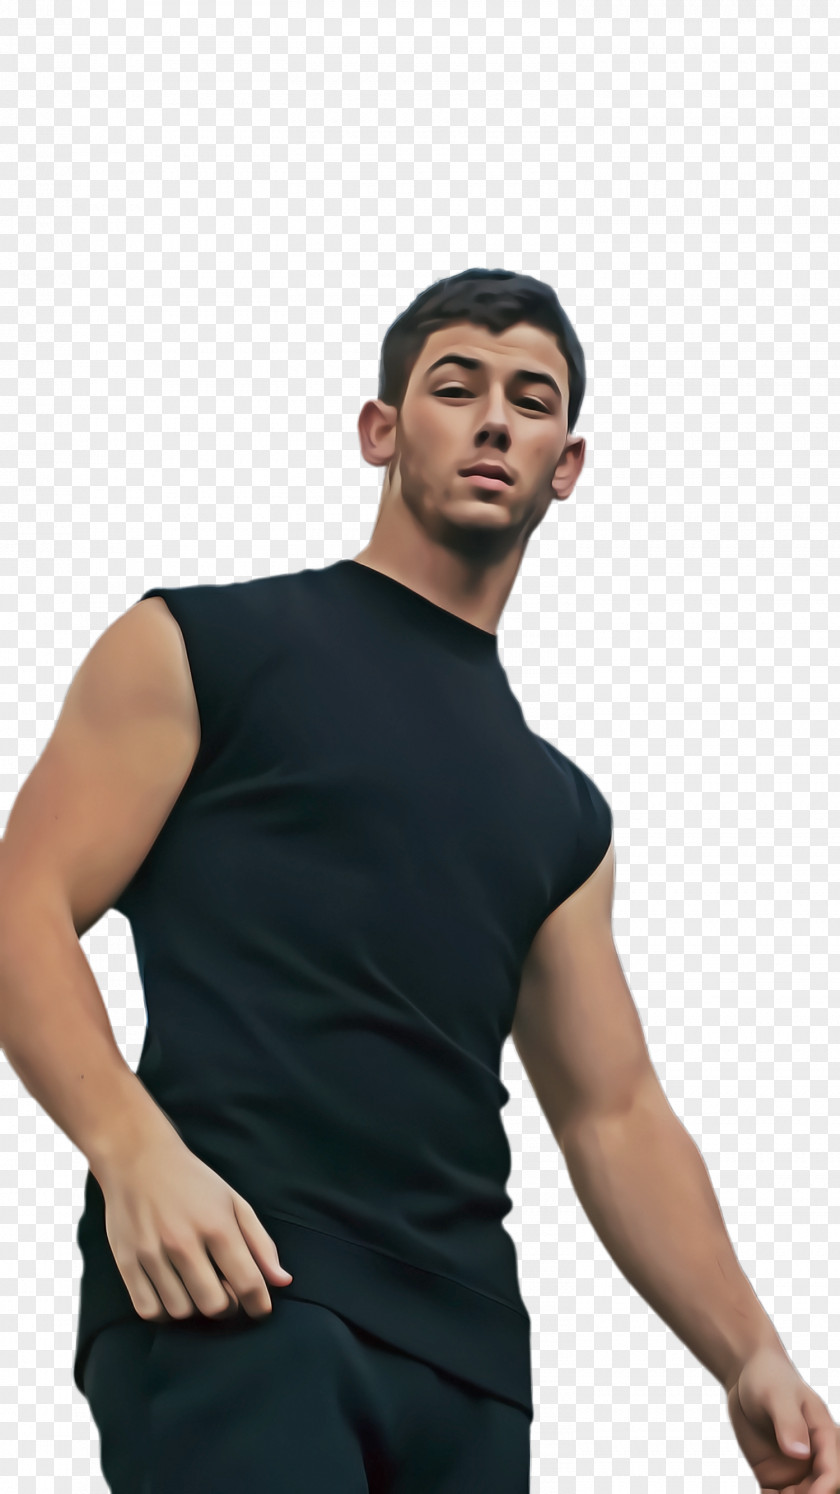 Muscle Sleeveless Shirt Clothing Black T-shirt Neck Arm PNG